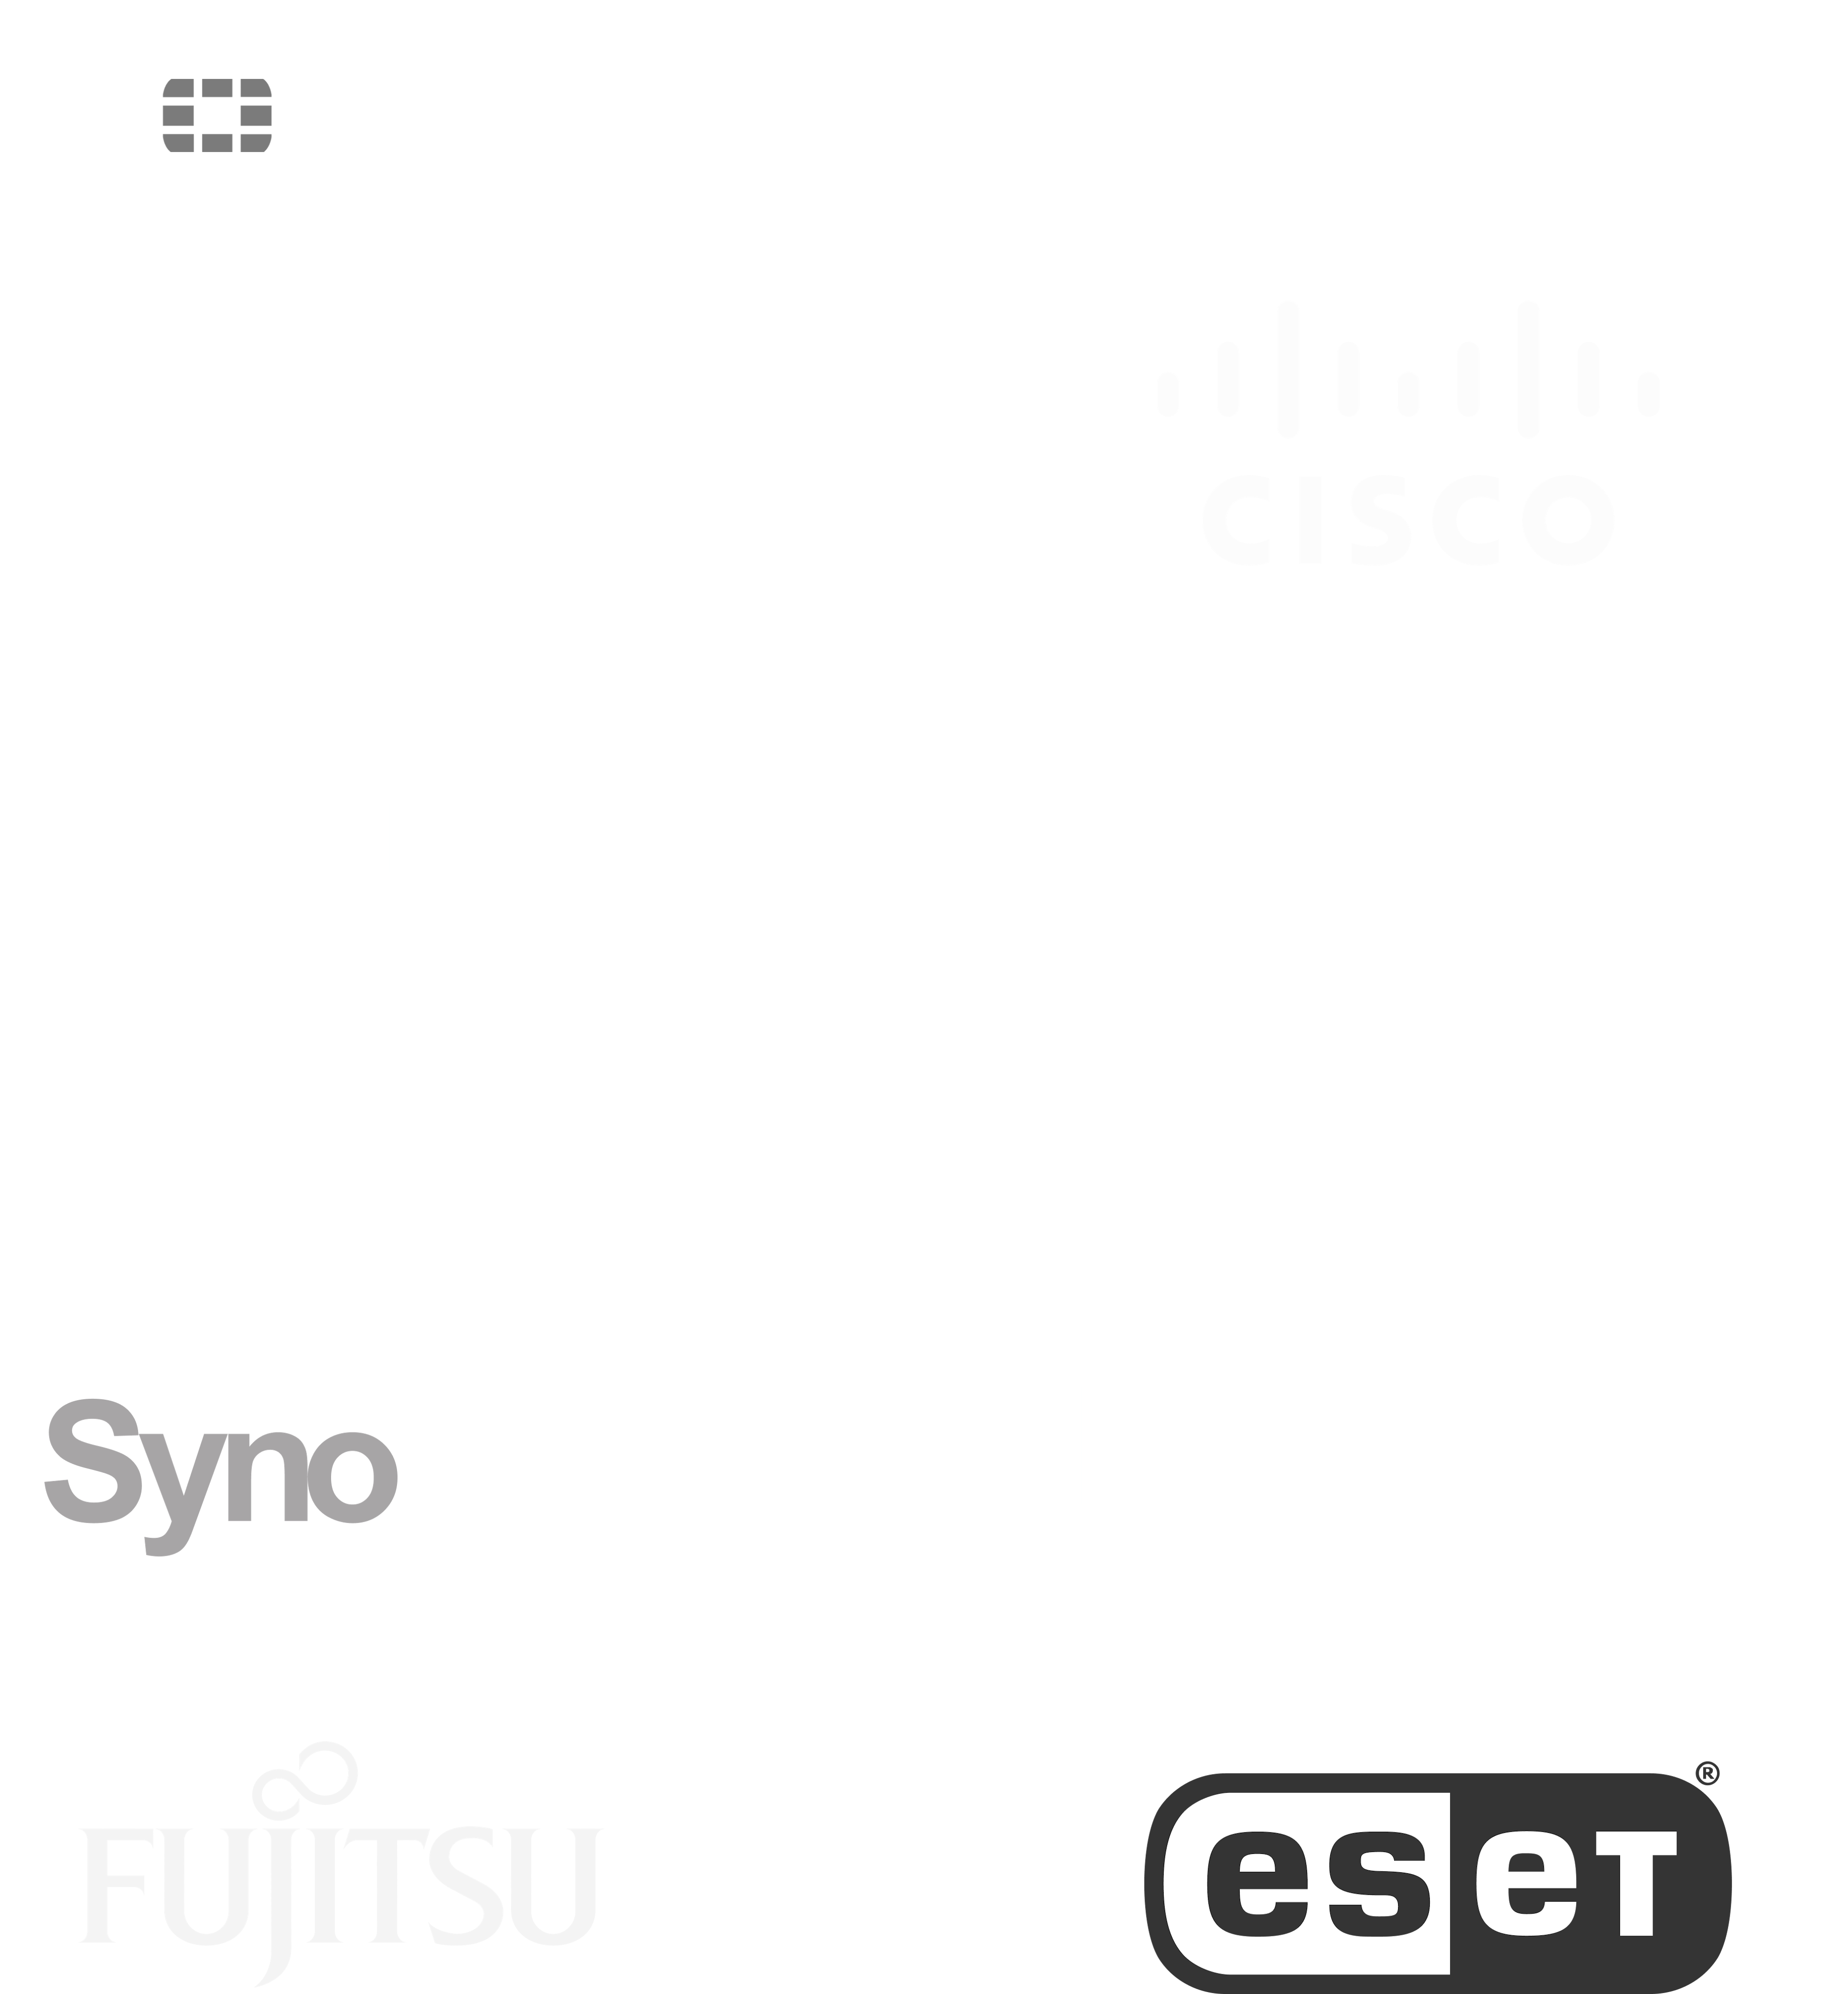 Partners image logos